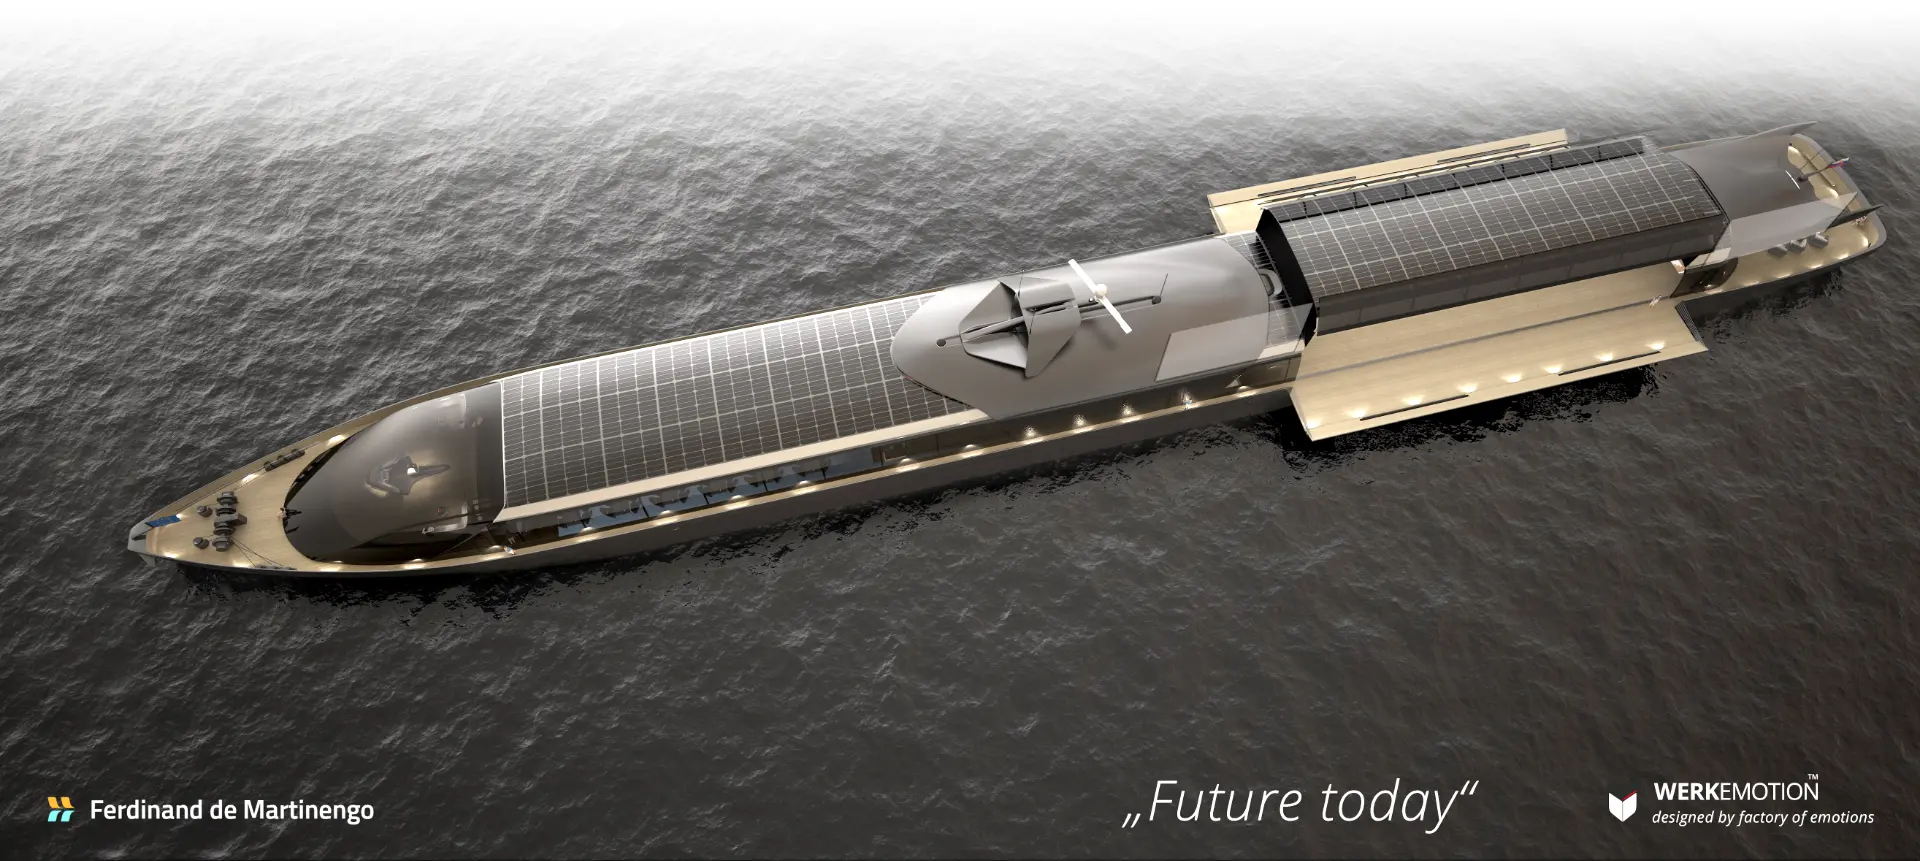 FDM River Boat Development_Design by Werkemotion